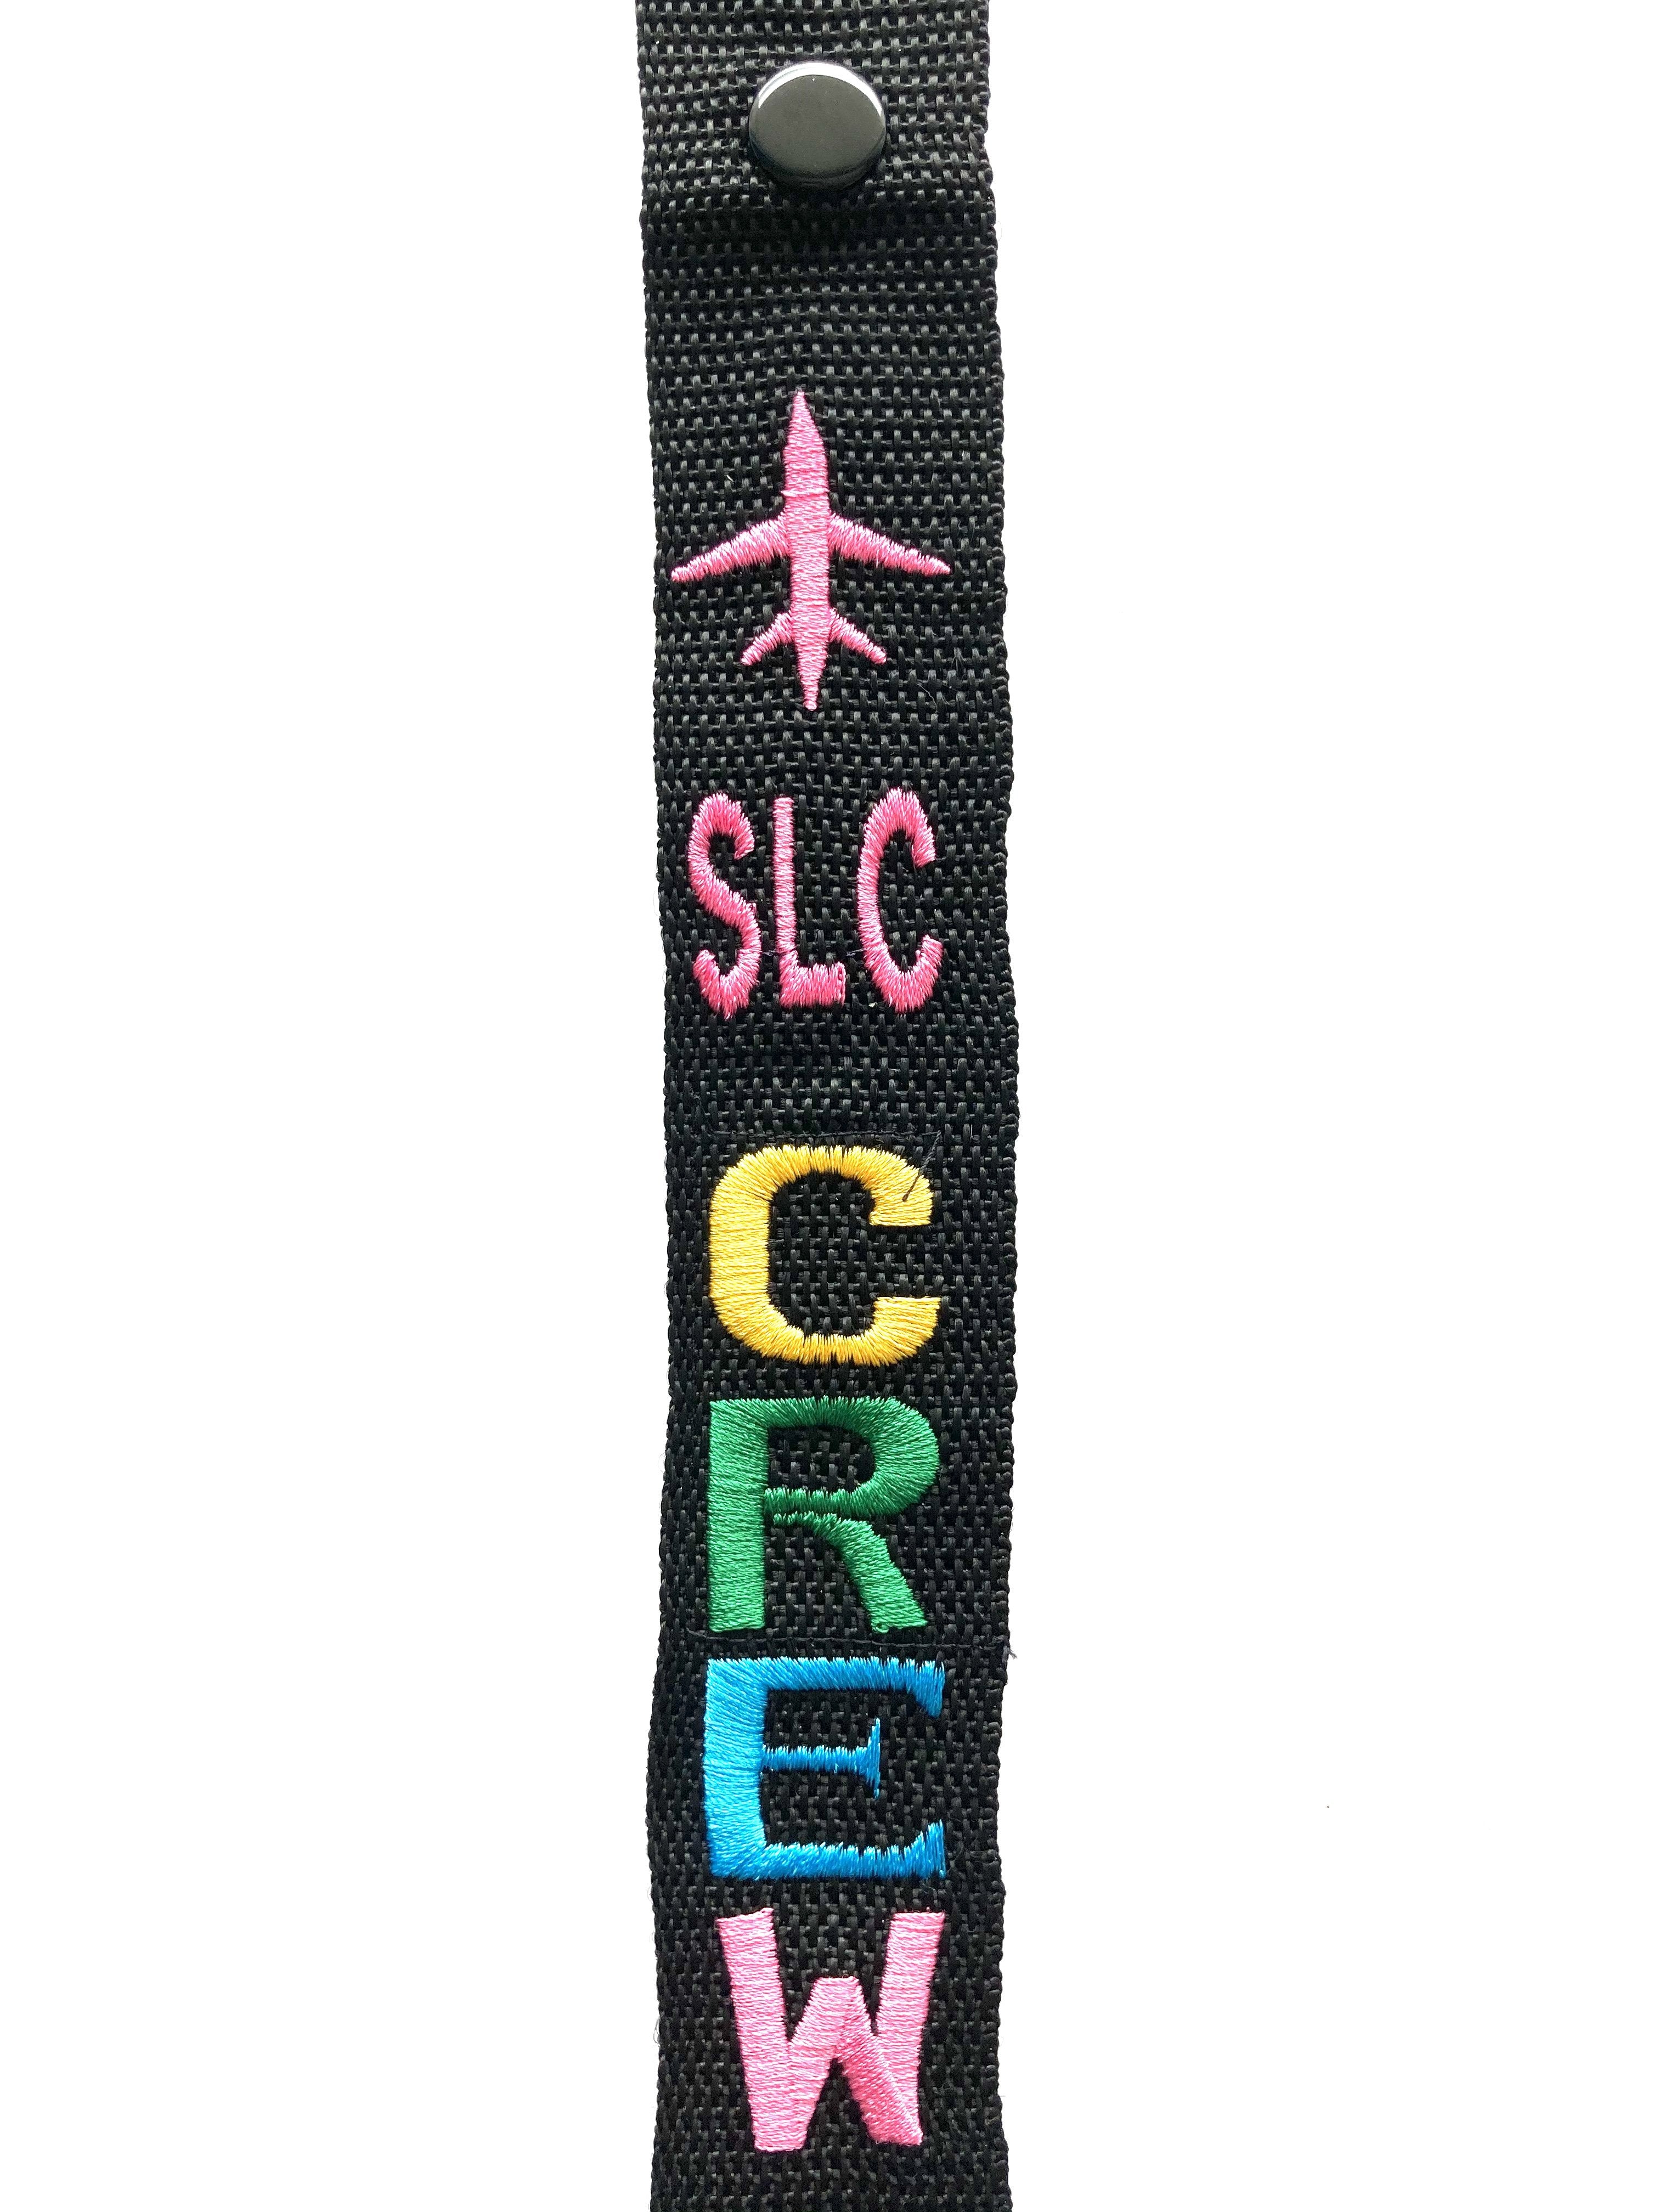 CREW Luggage Tag - SLC Pride